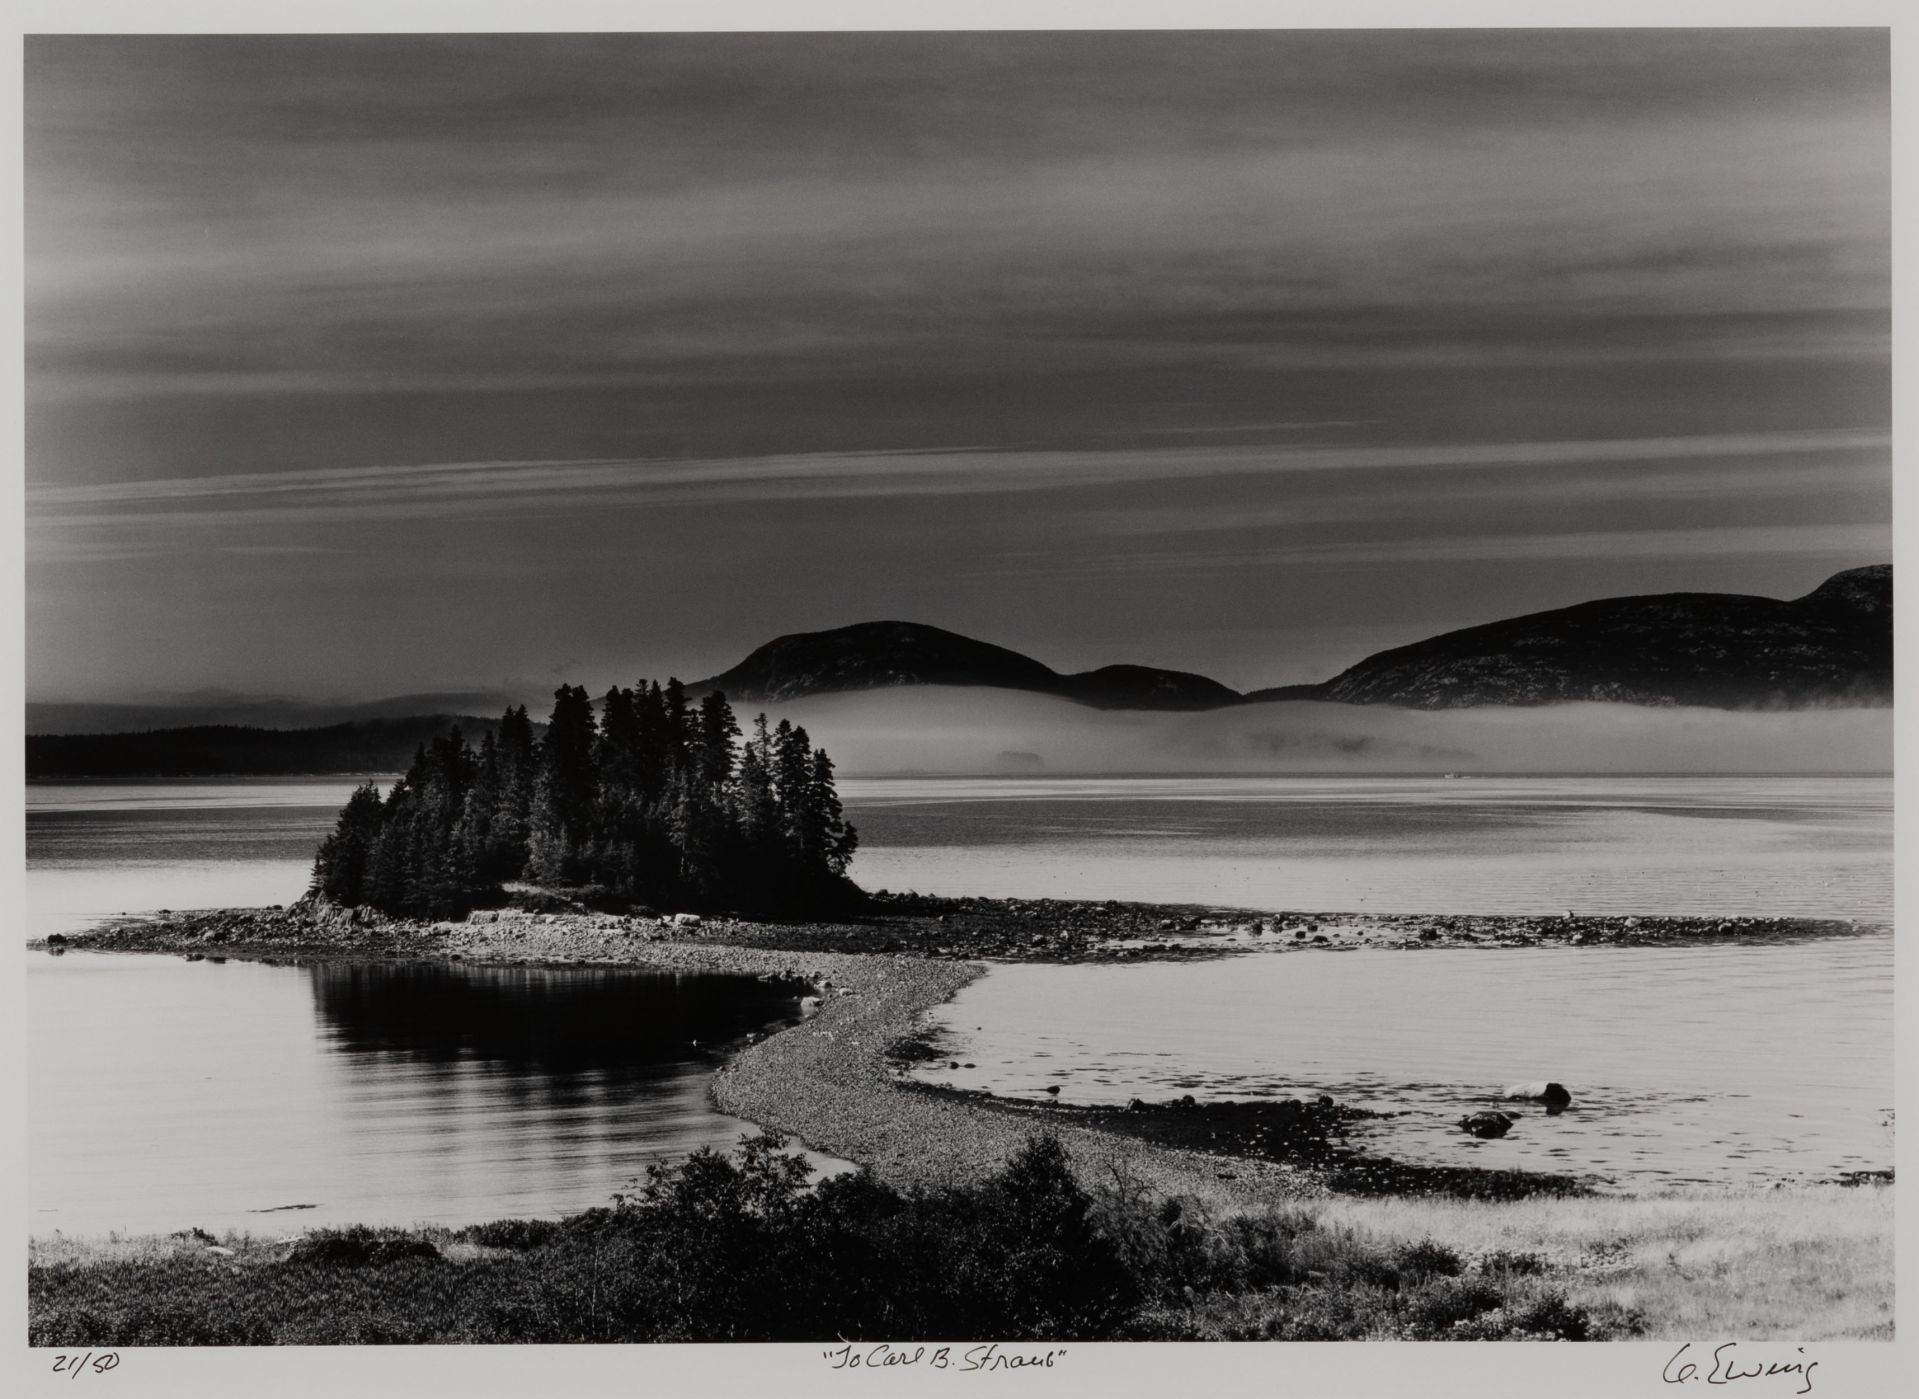 Gifford Ewing, Little Calf Island, Frenchman’s Bay, Maine, n.d., silver gelatin selenium fiber print, ed. 21/50, 2020.1.14